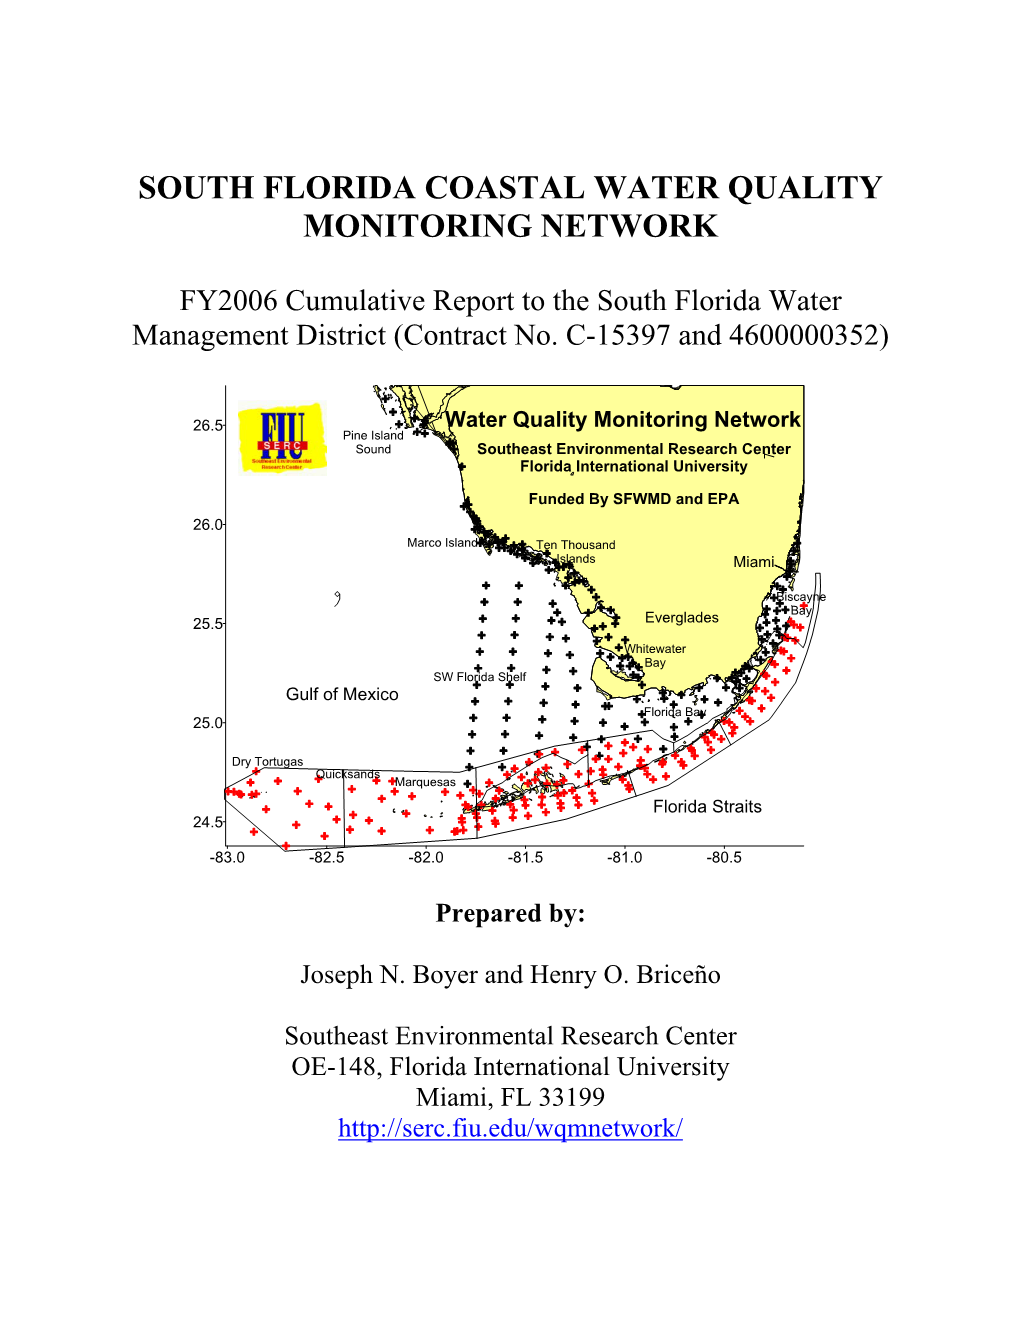 South Florida Coastal Water Quality Monitoring Network